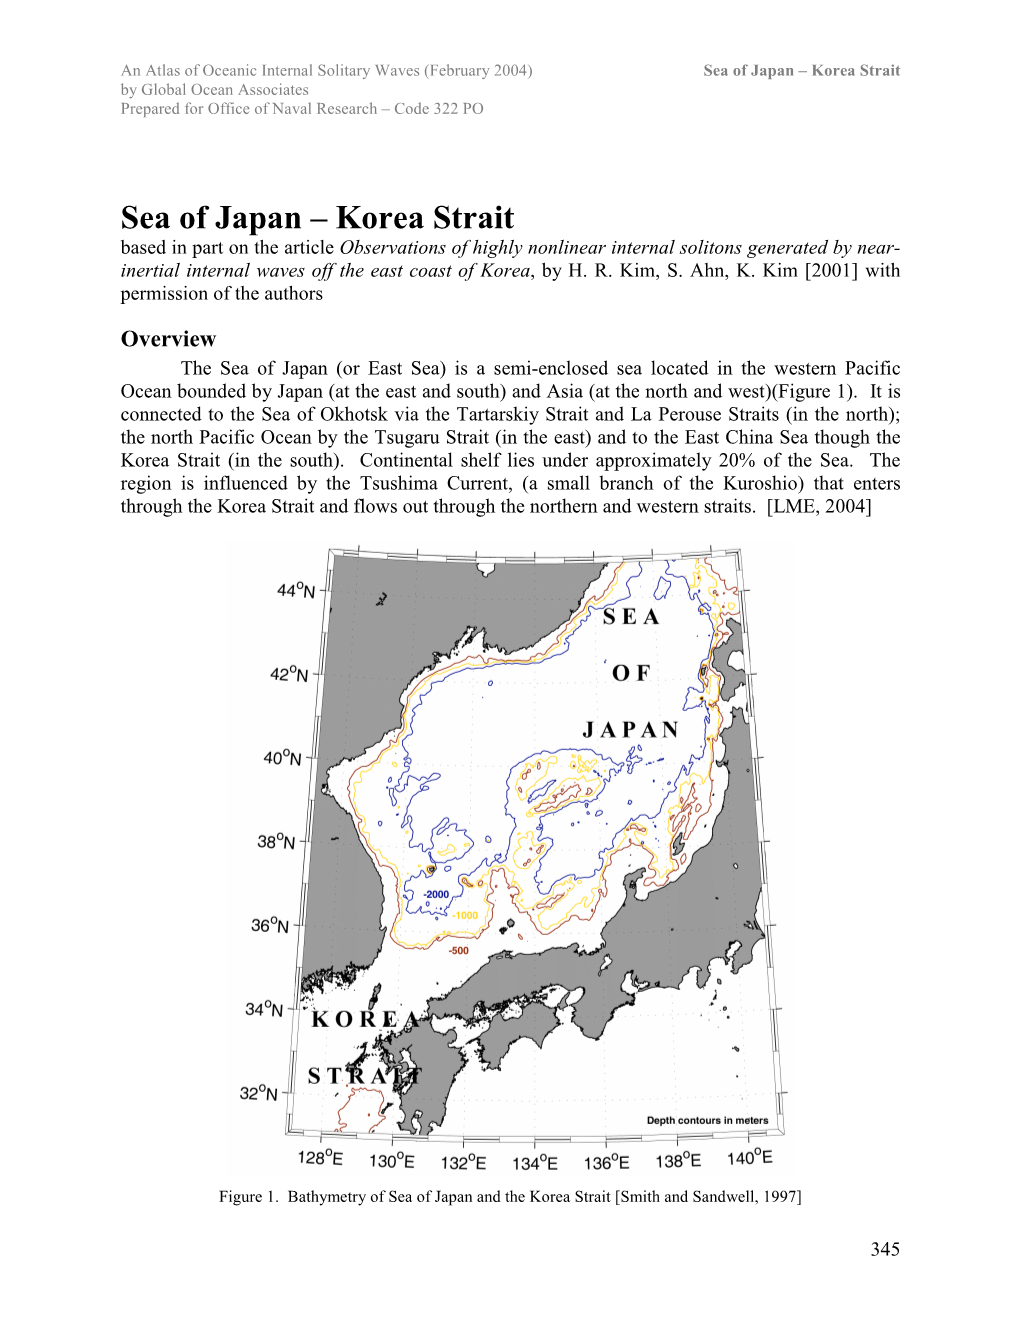 Sea of Japan – Korea Strait by Global Ocean Associates Prepared for Office of Naval Research – Code 322 PO